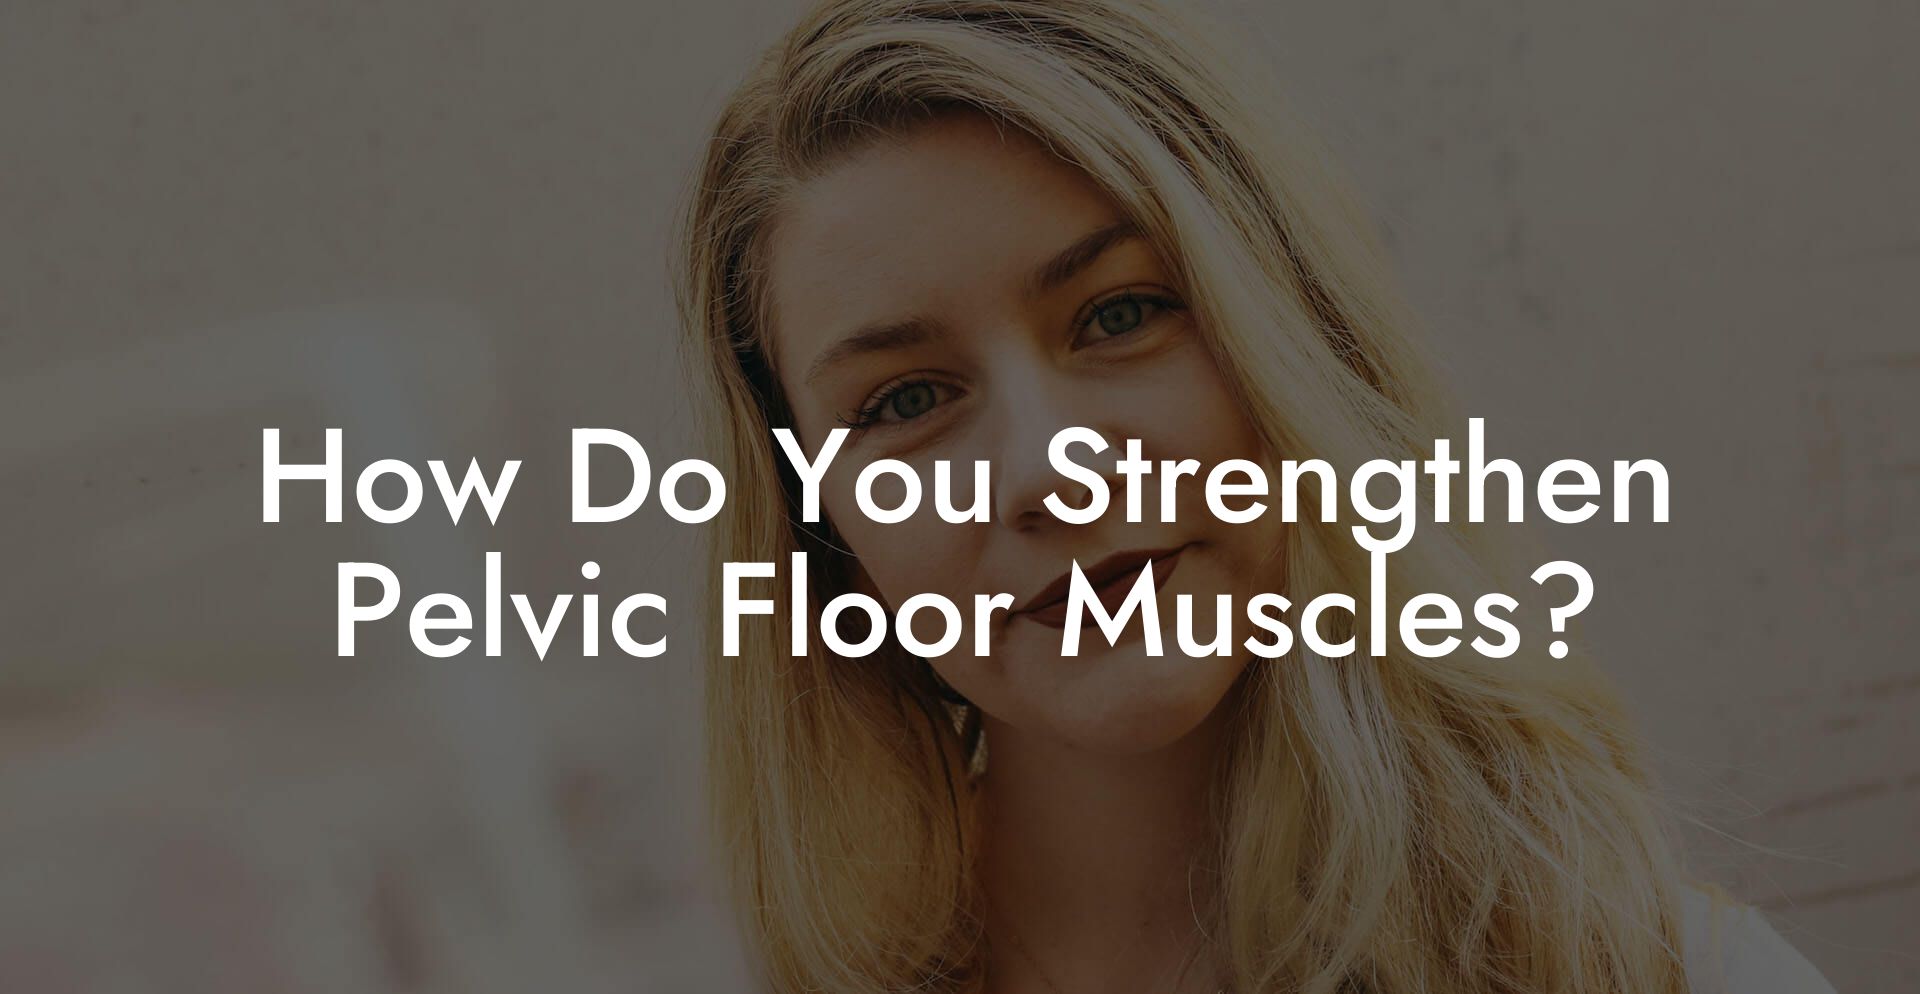 How Do You Strengthen Pelvic Floor Muscles?